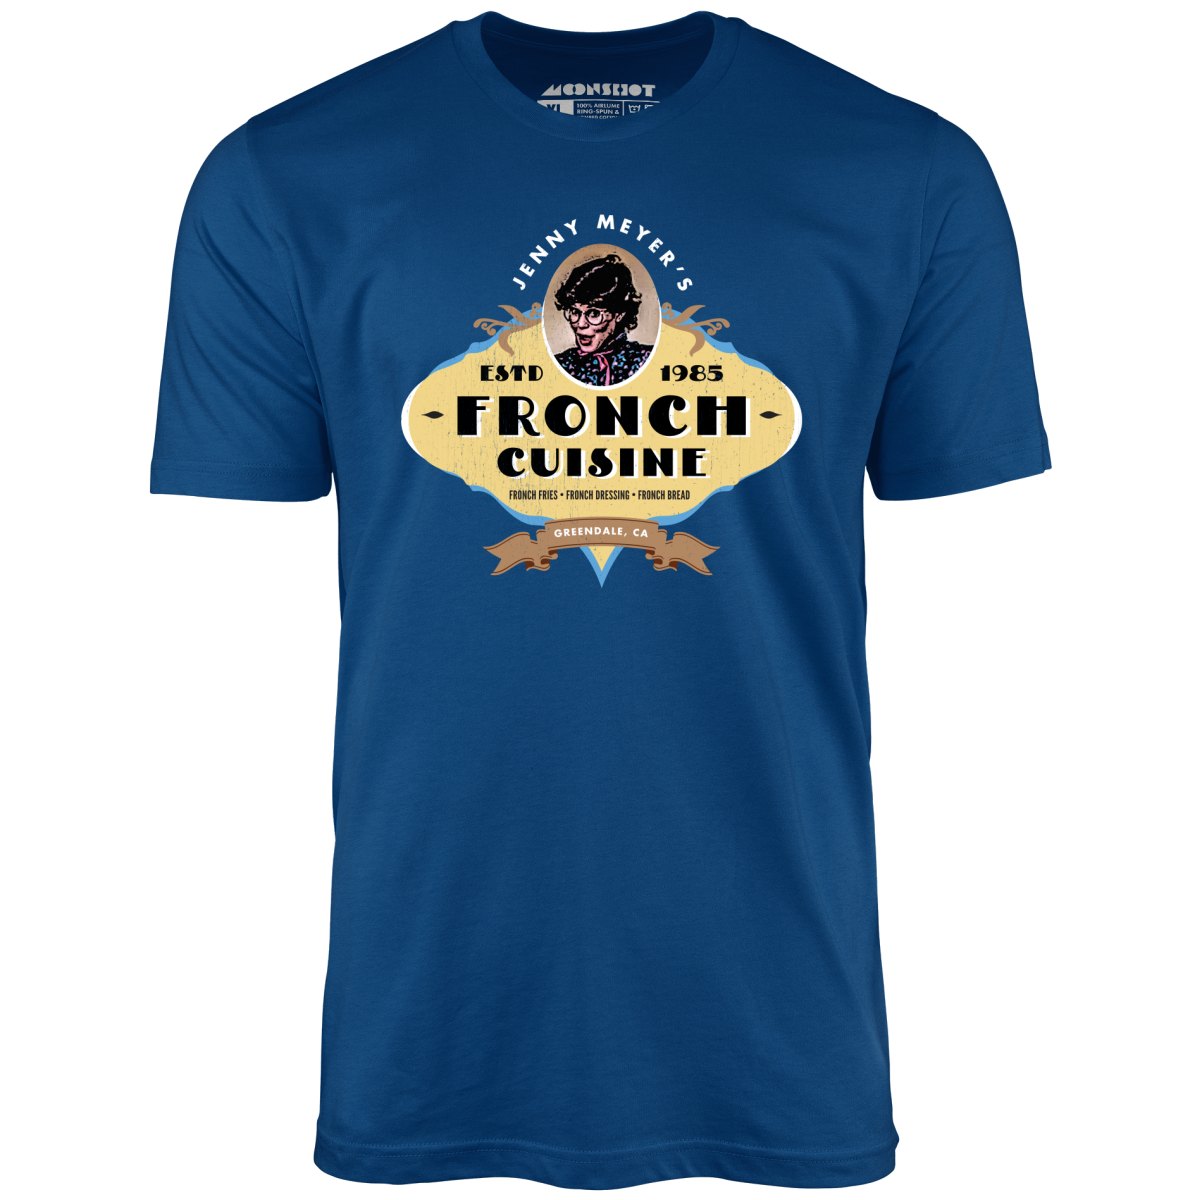 Jenny Meyers Fronch Cuisine - Unisex T-Shirt